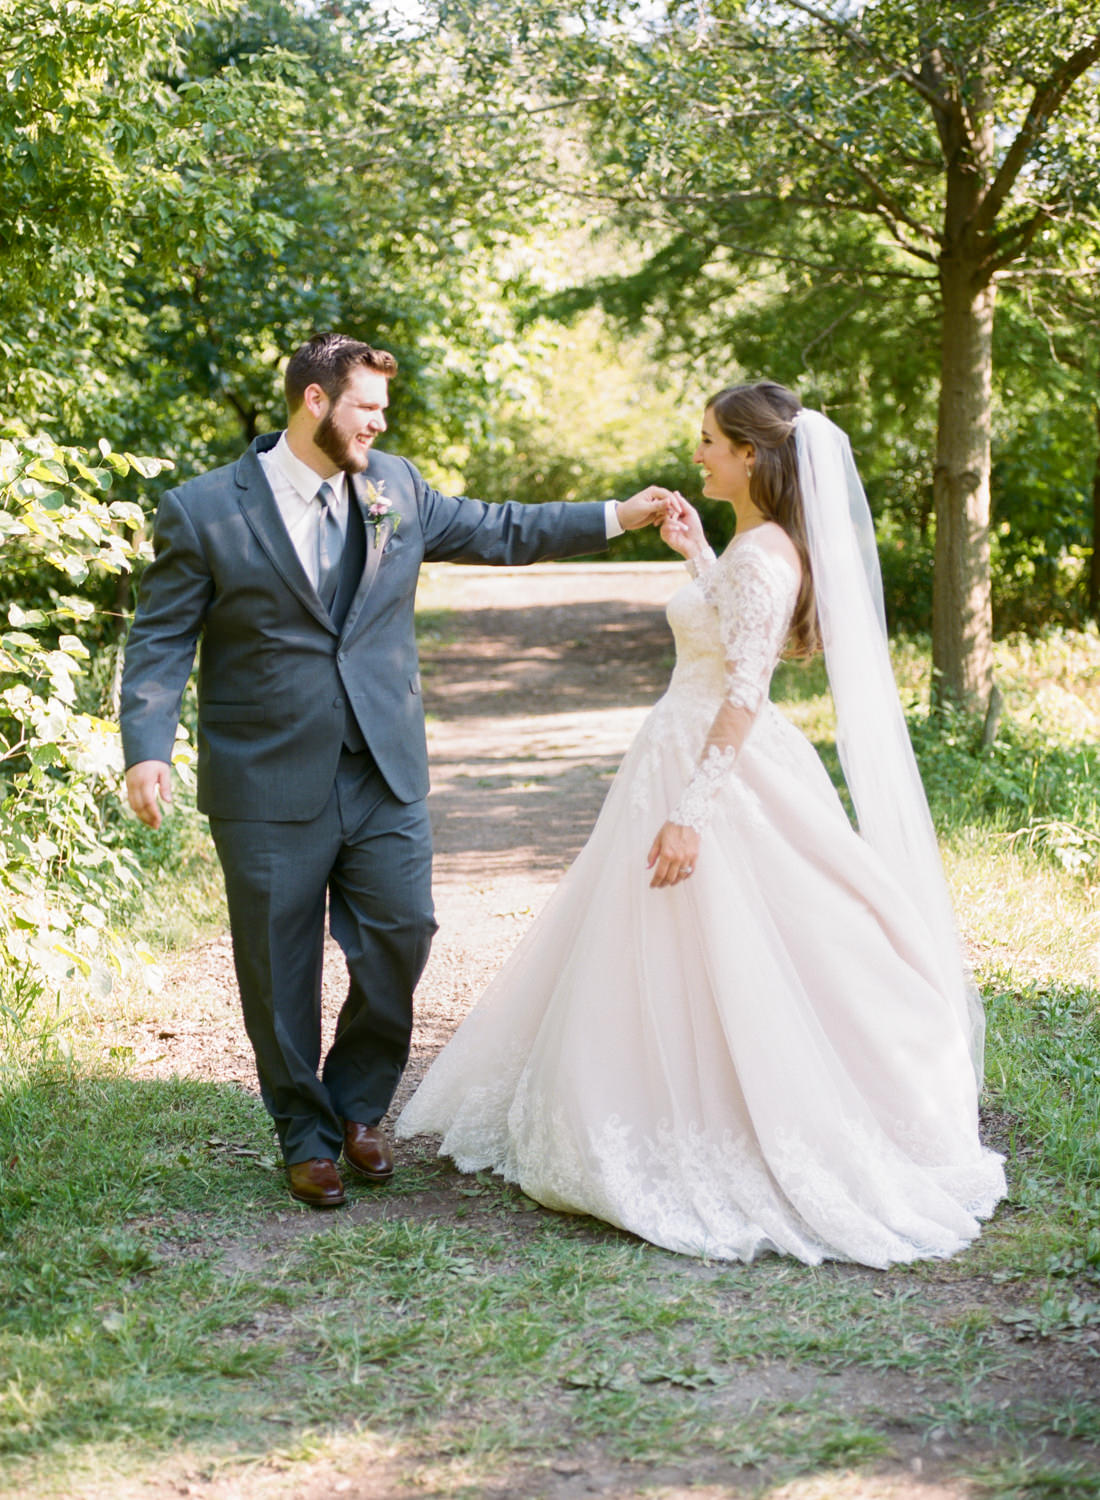 Bride and groom dancing; St. Louis fine art film wedding photographer Erica Robnett Photography